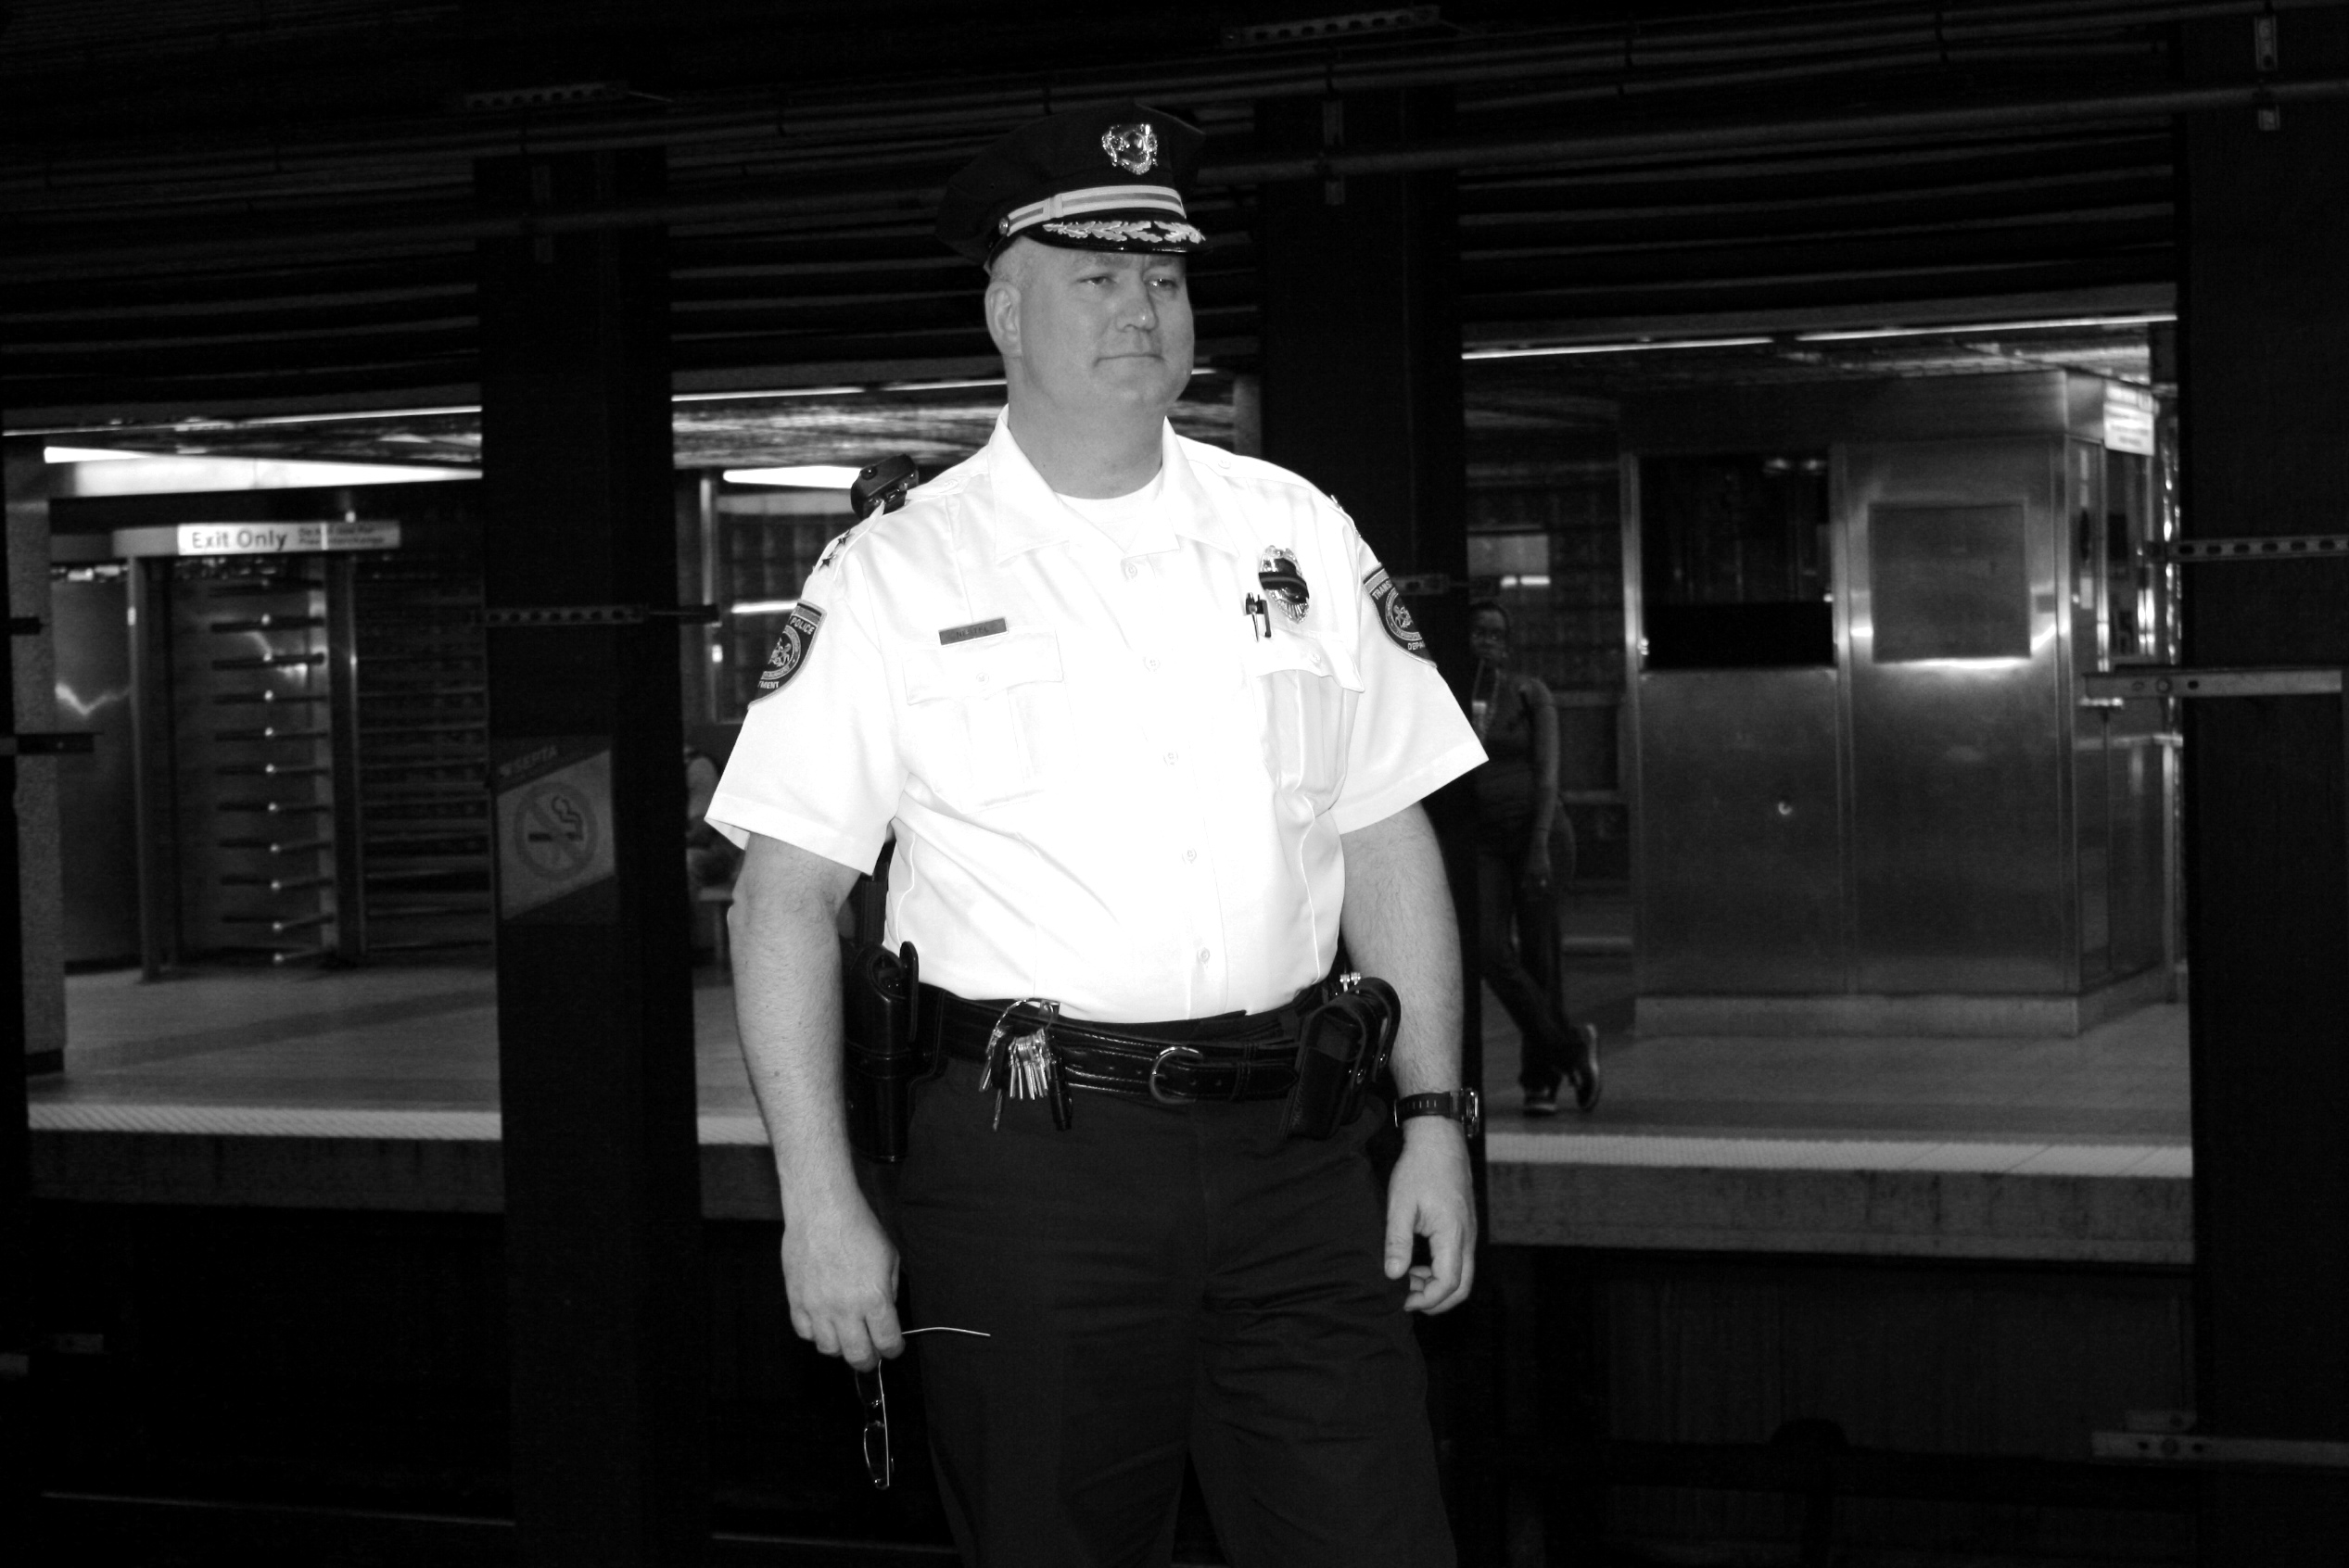 Chief Nestel at 13th Street Station